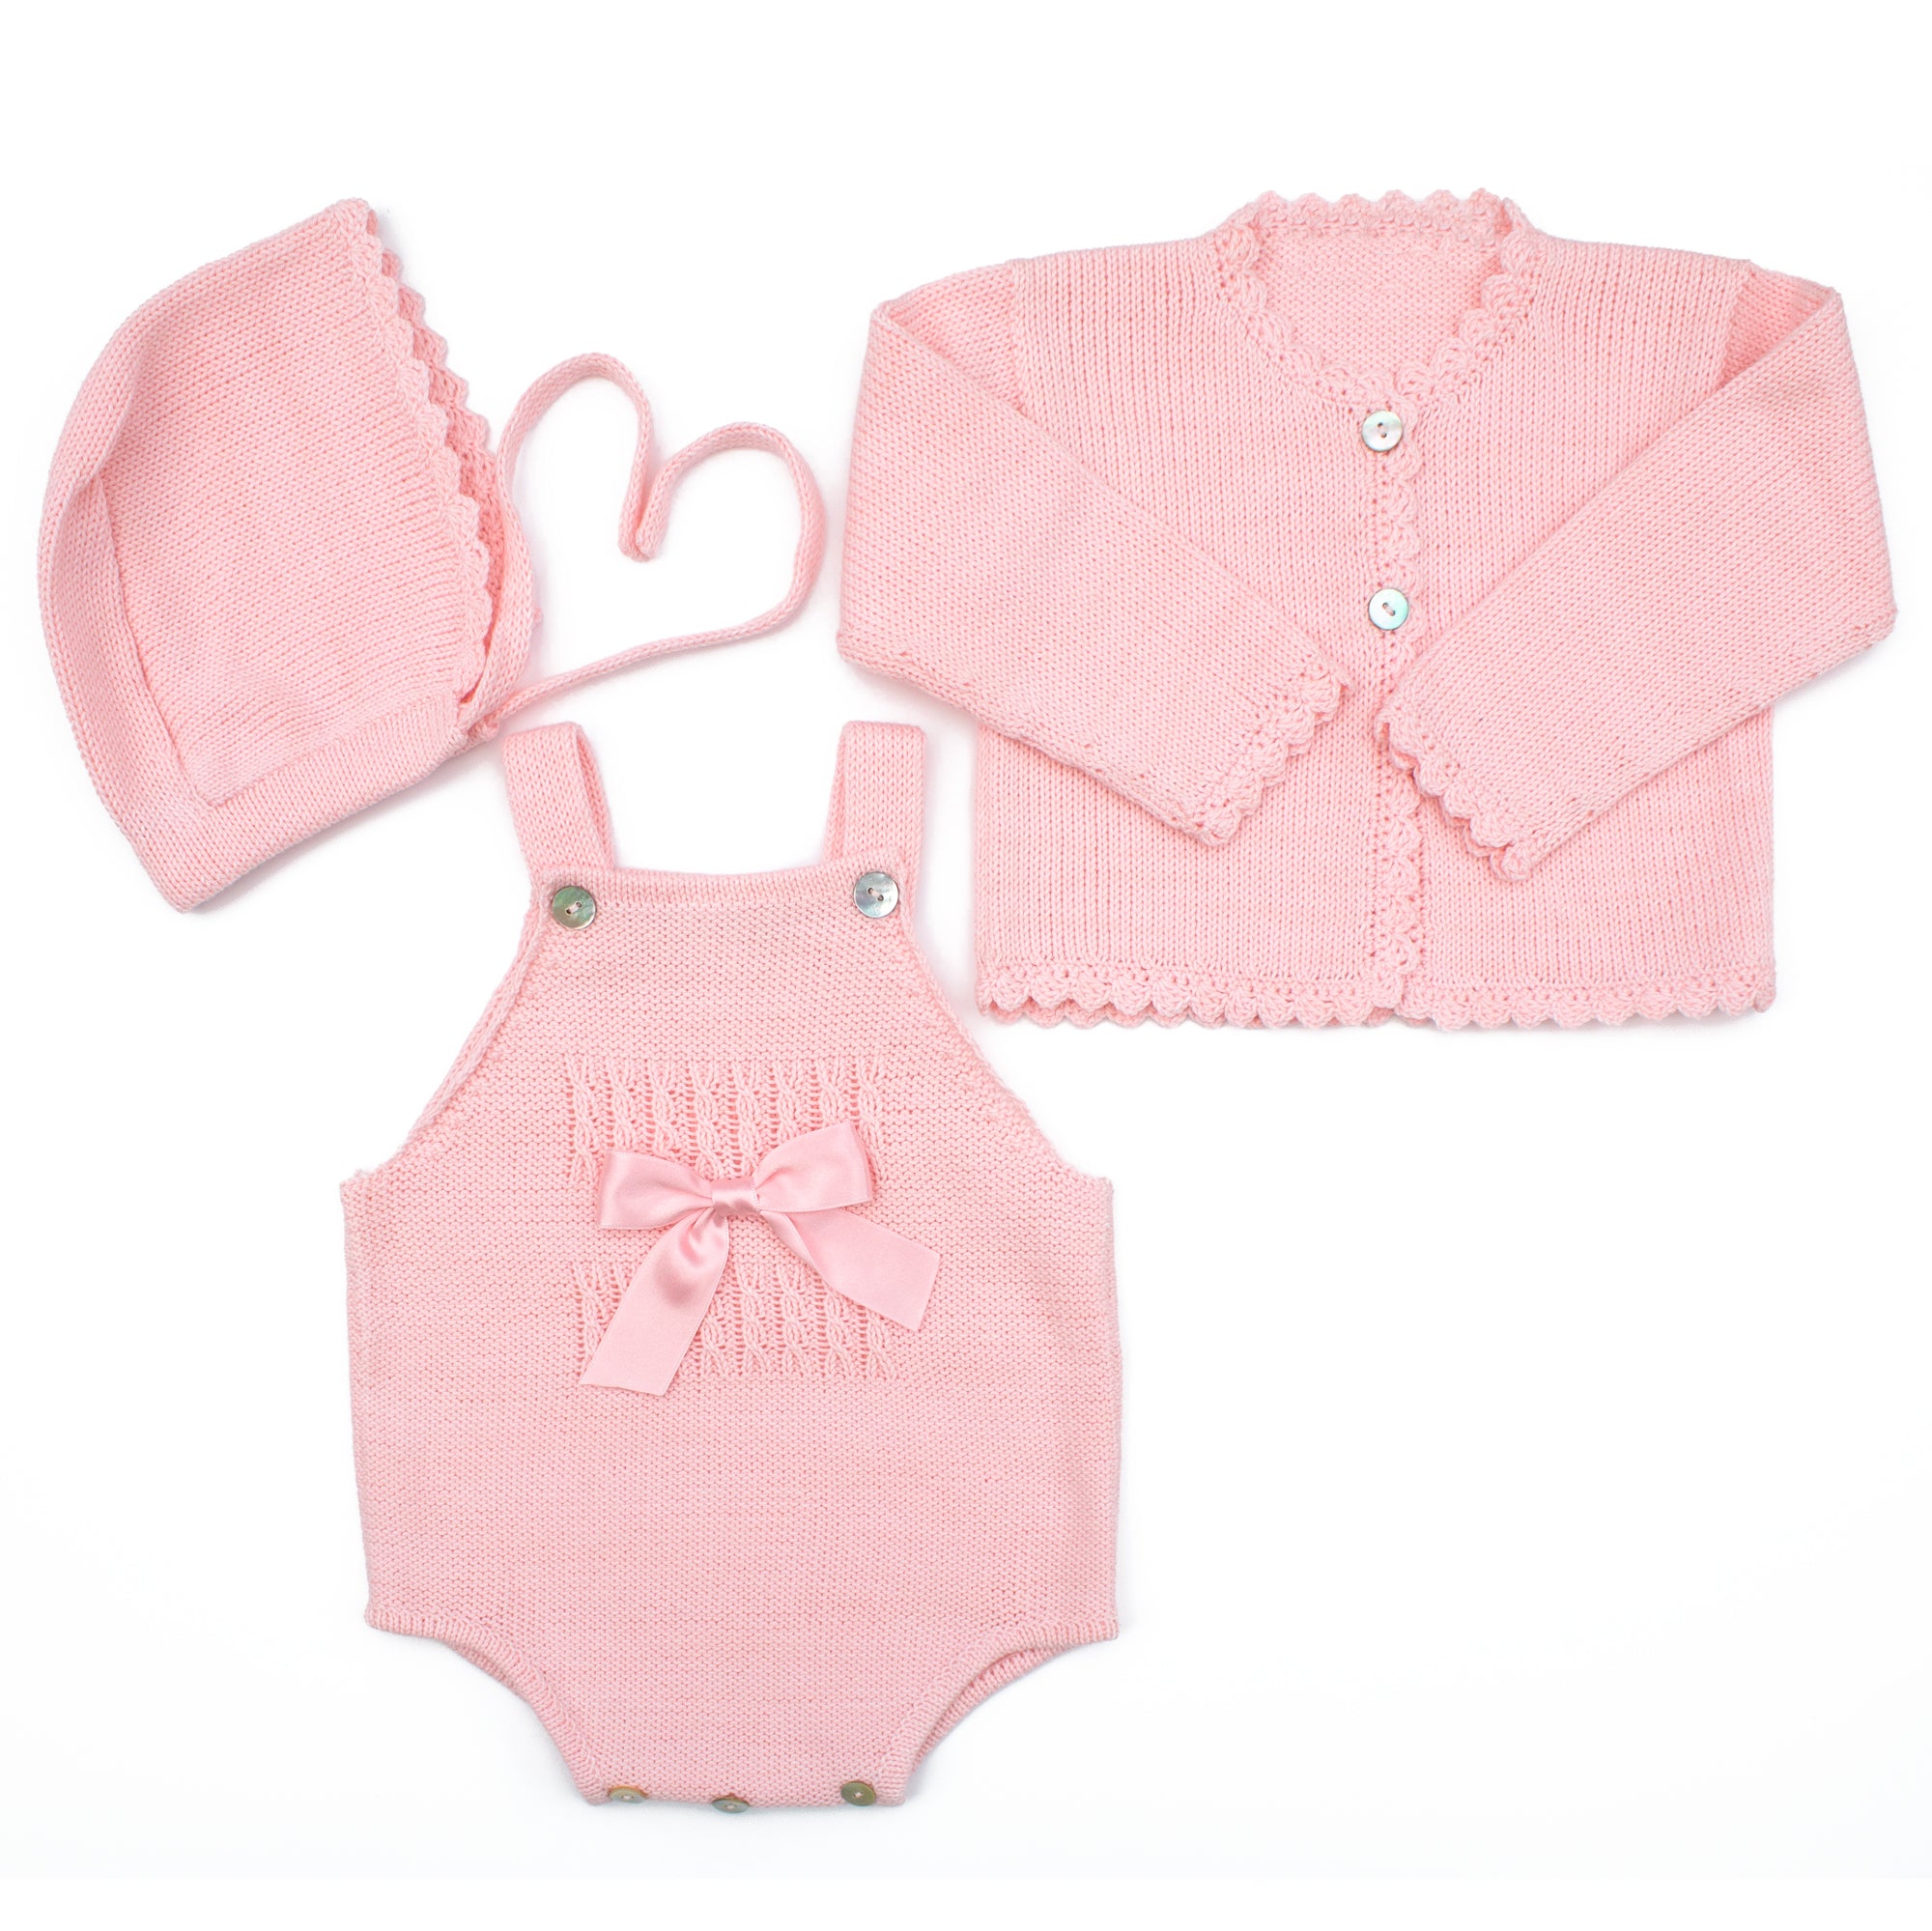 pink knitted baby girl romper, cardigan & bonnet set